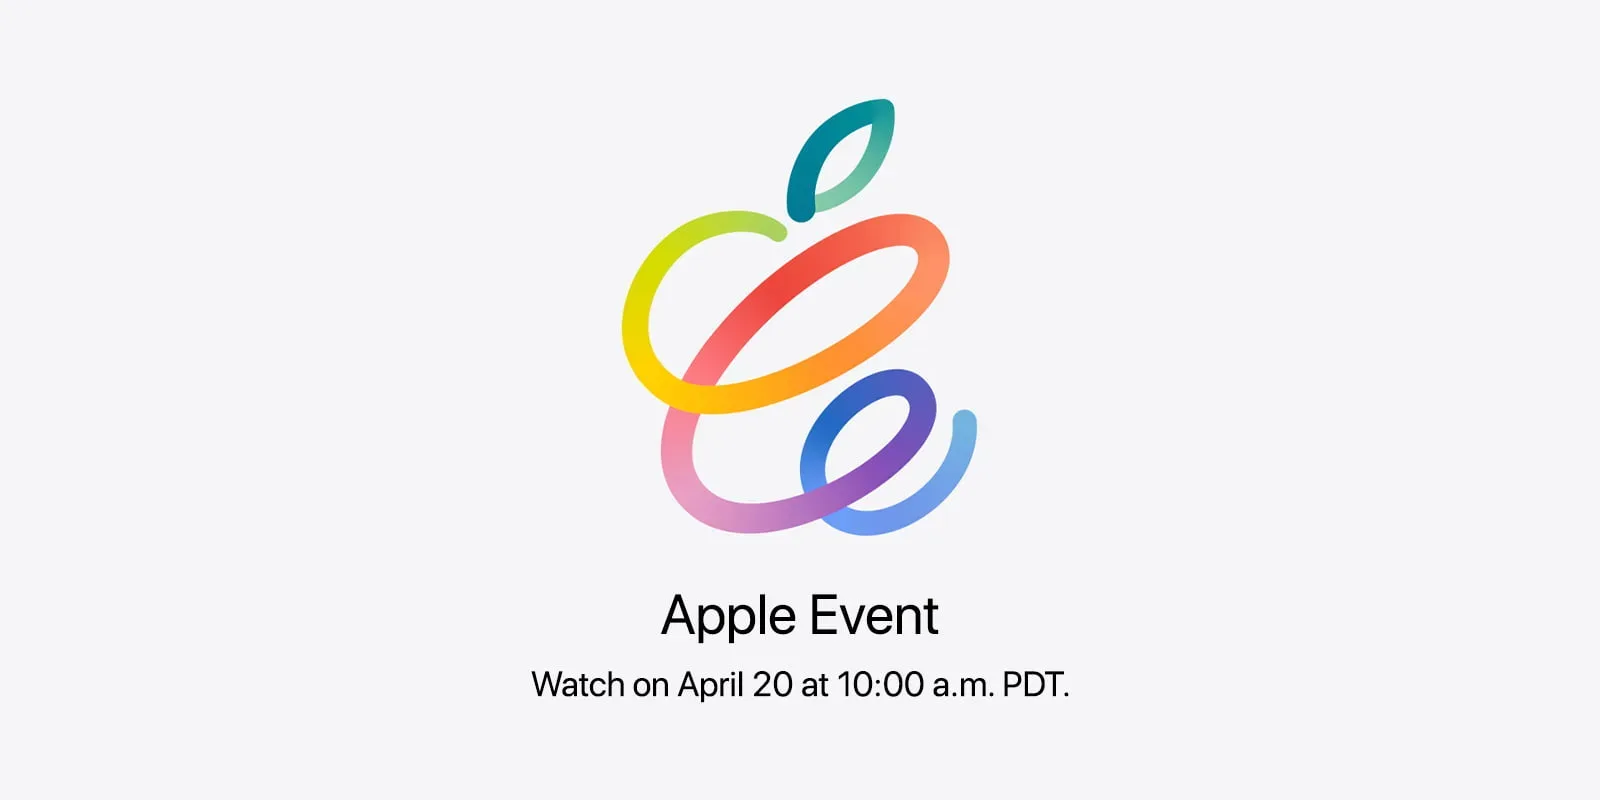 Apple Confirms Its Next Event On April 20